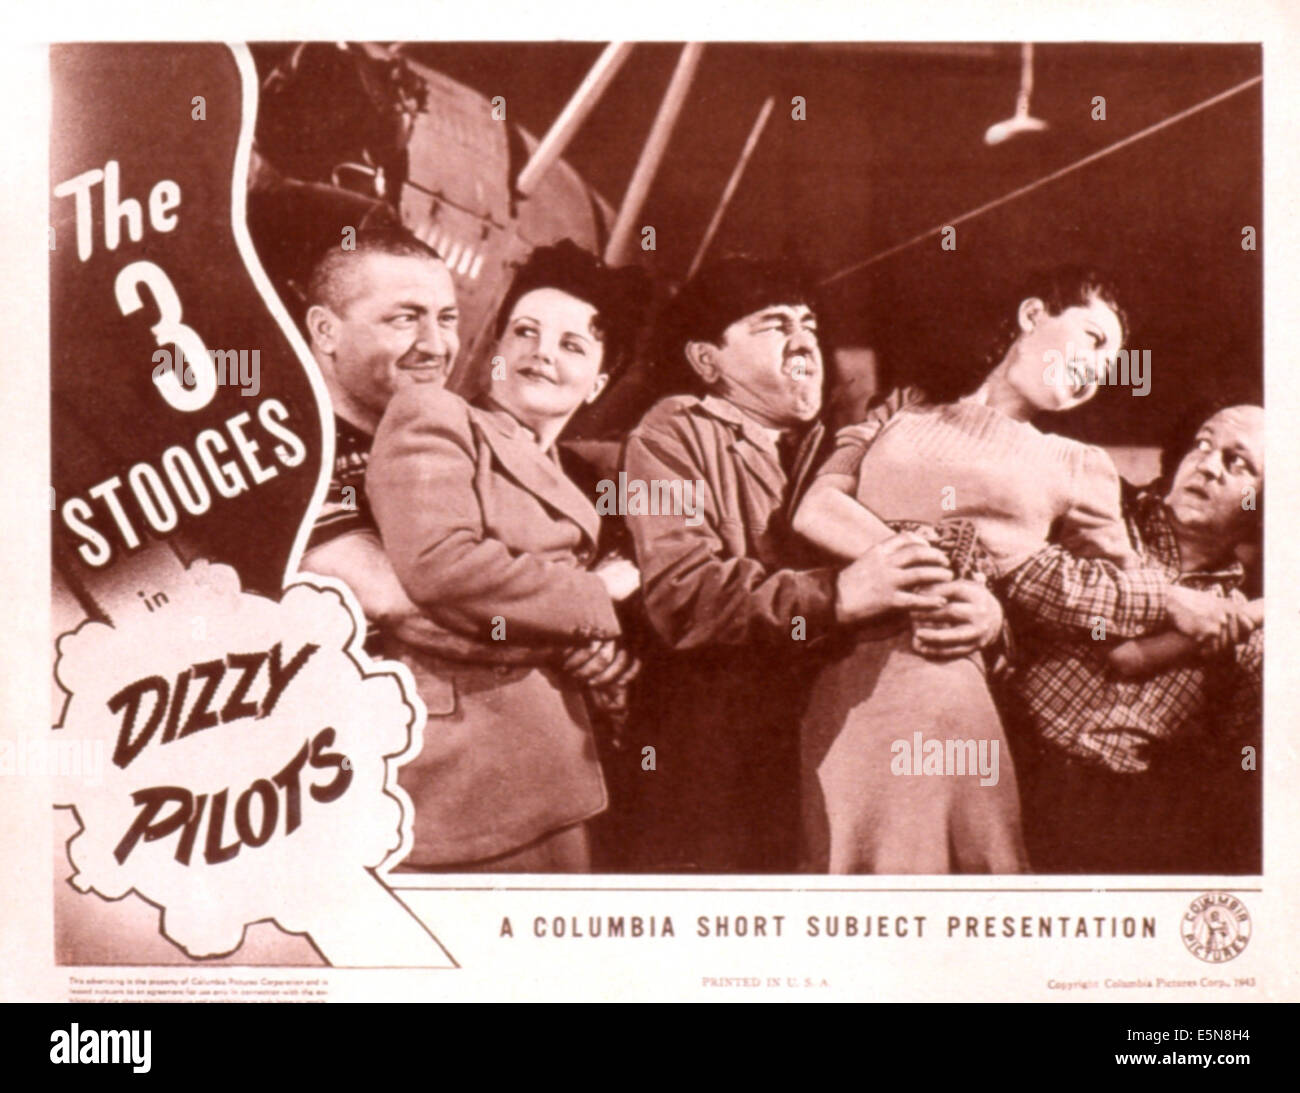 DIZZY piloti, Curly Howard, Judy Malcolm, Moe Howard, Sethma Williams, Larry Fine (The Three Stooges), 1943 Foto Stock